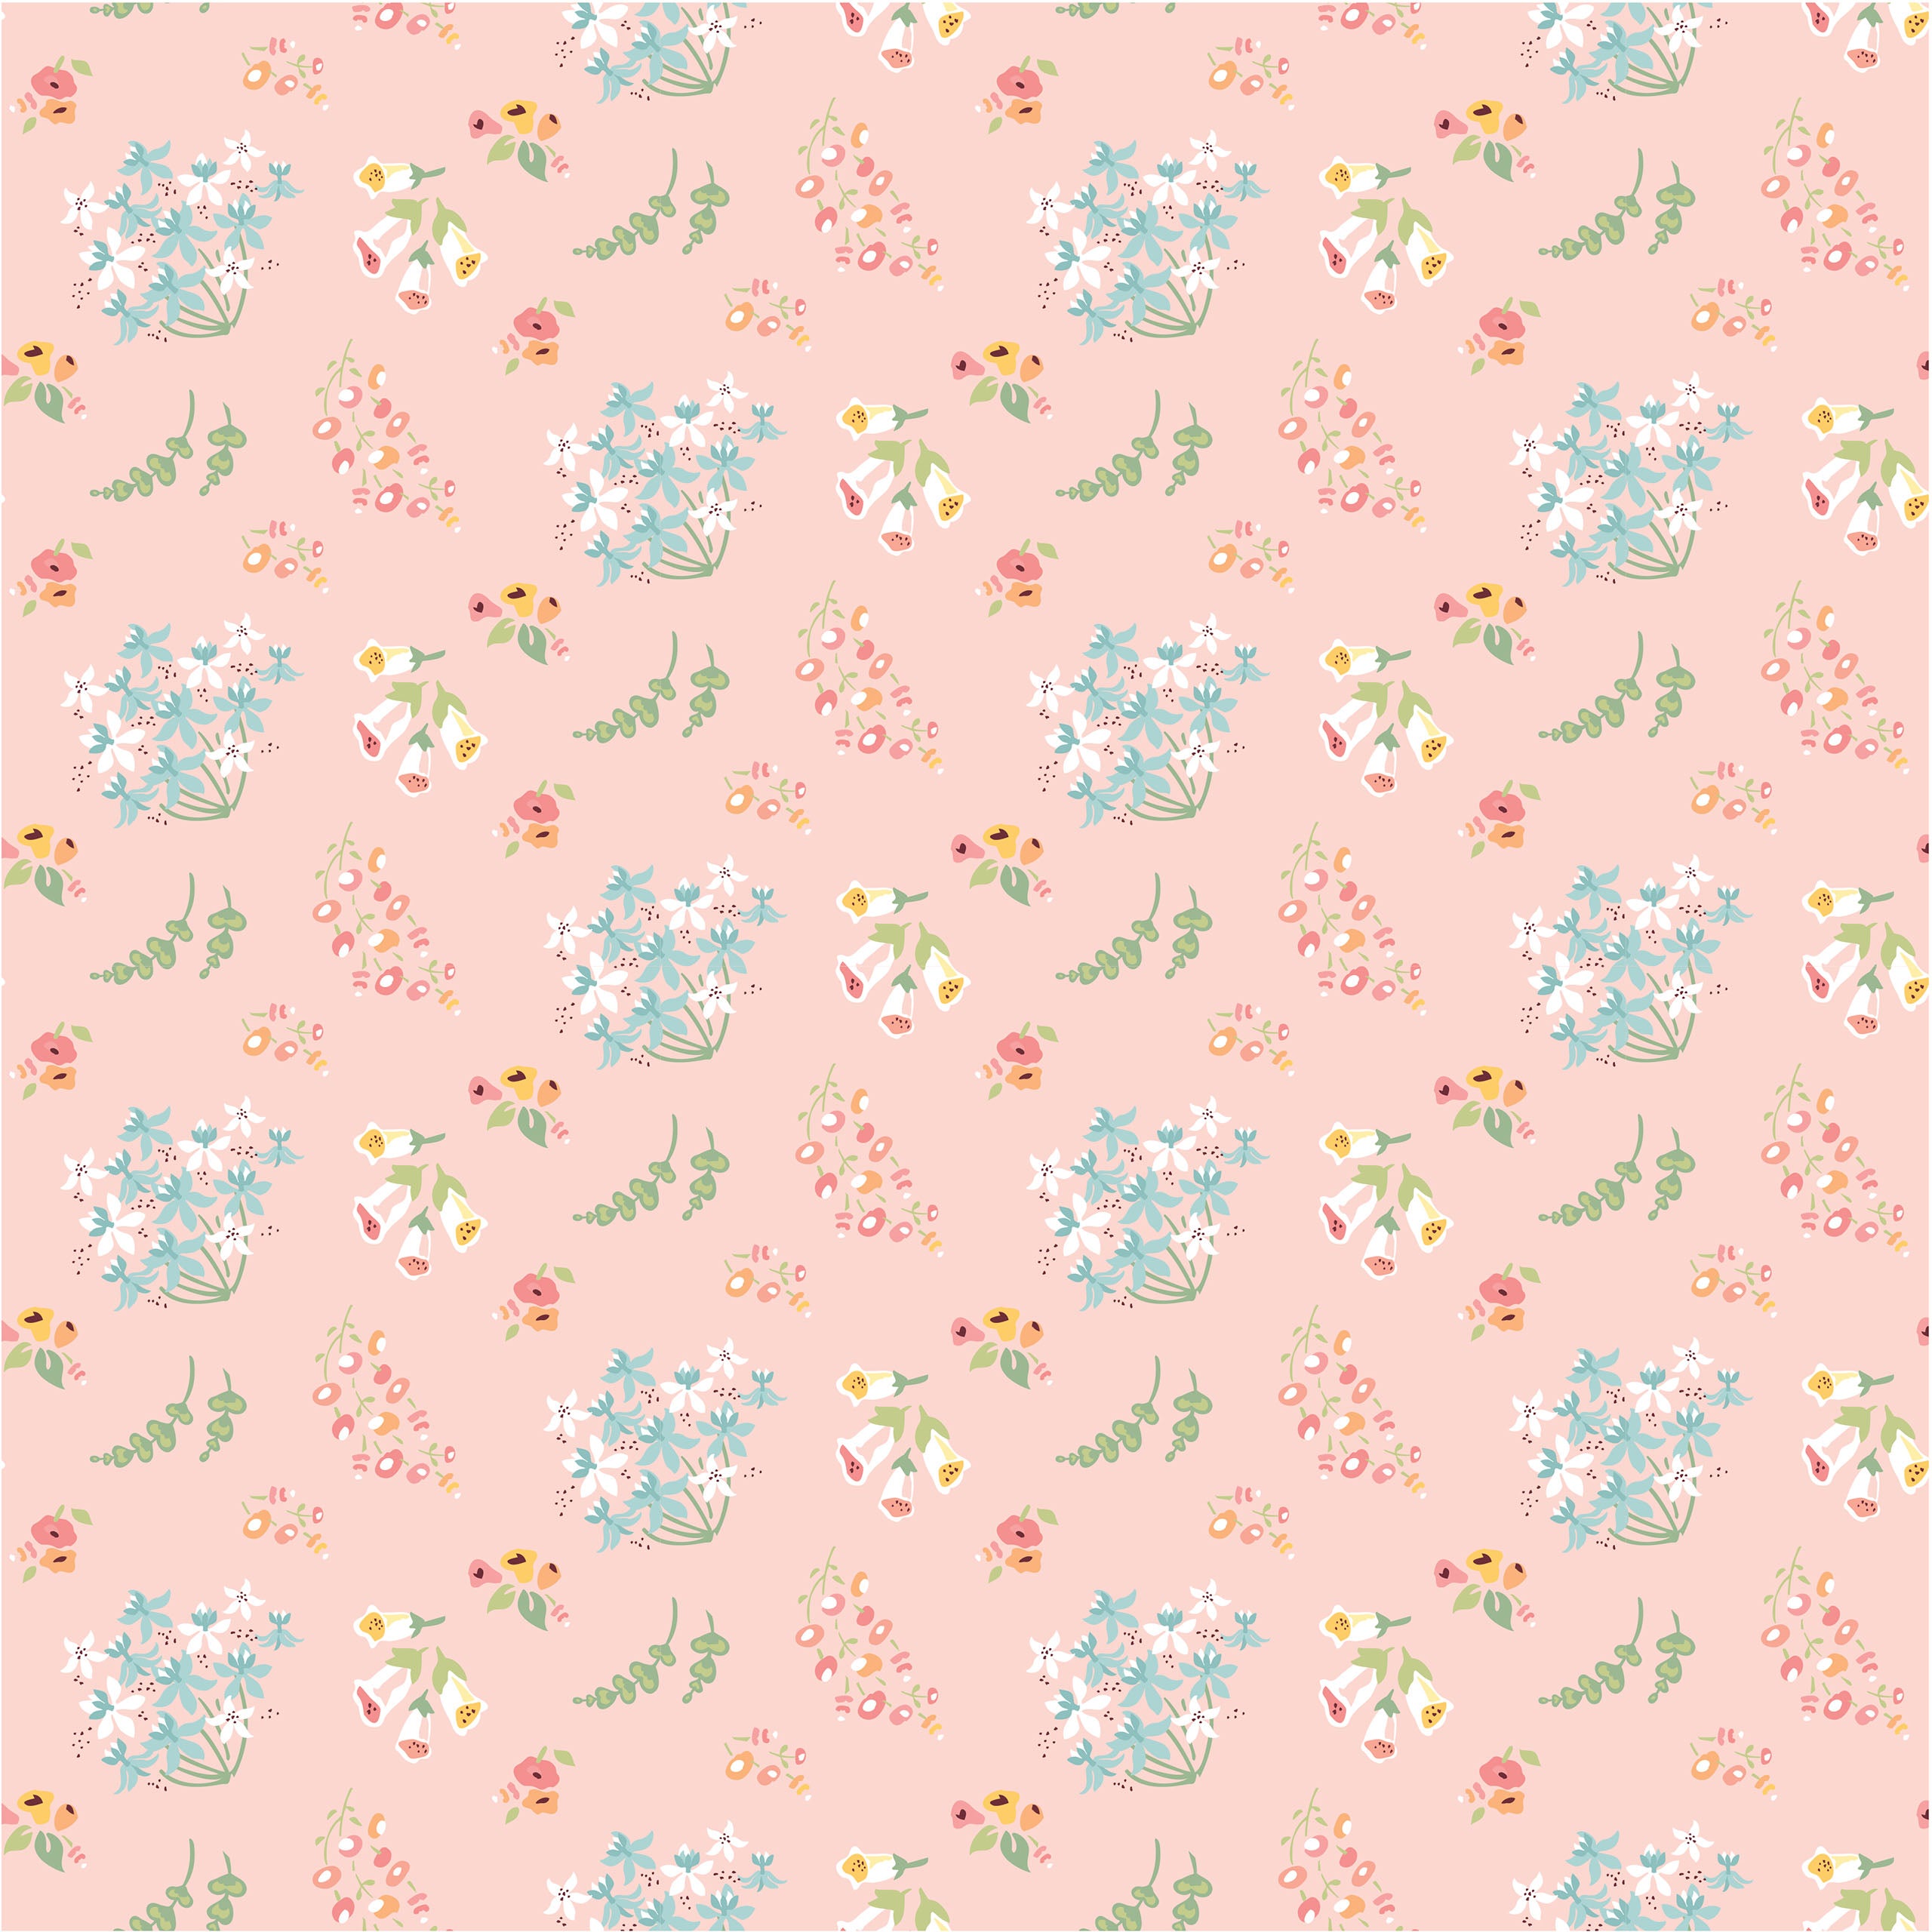 Hollyhock Lane Pink Bloom Yardage by Lori Woods for Poppie Cotton Fabrics